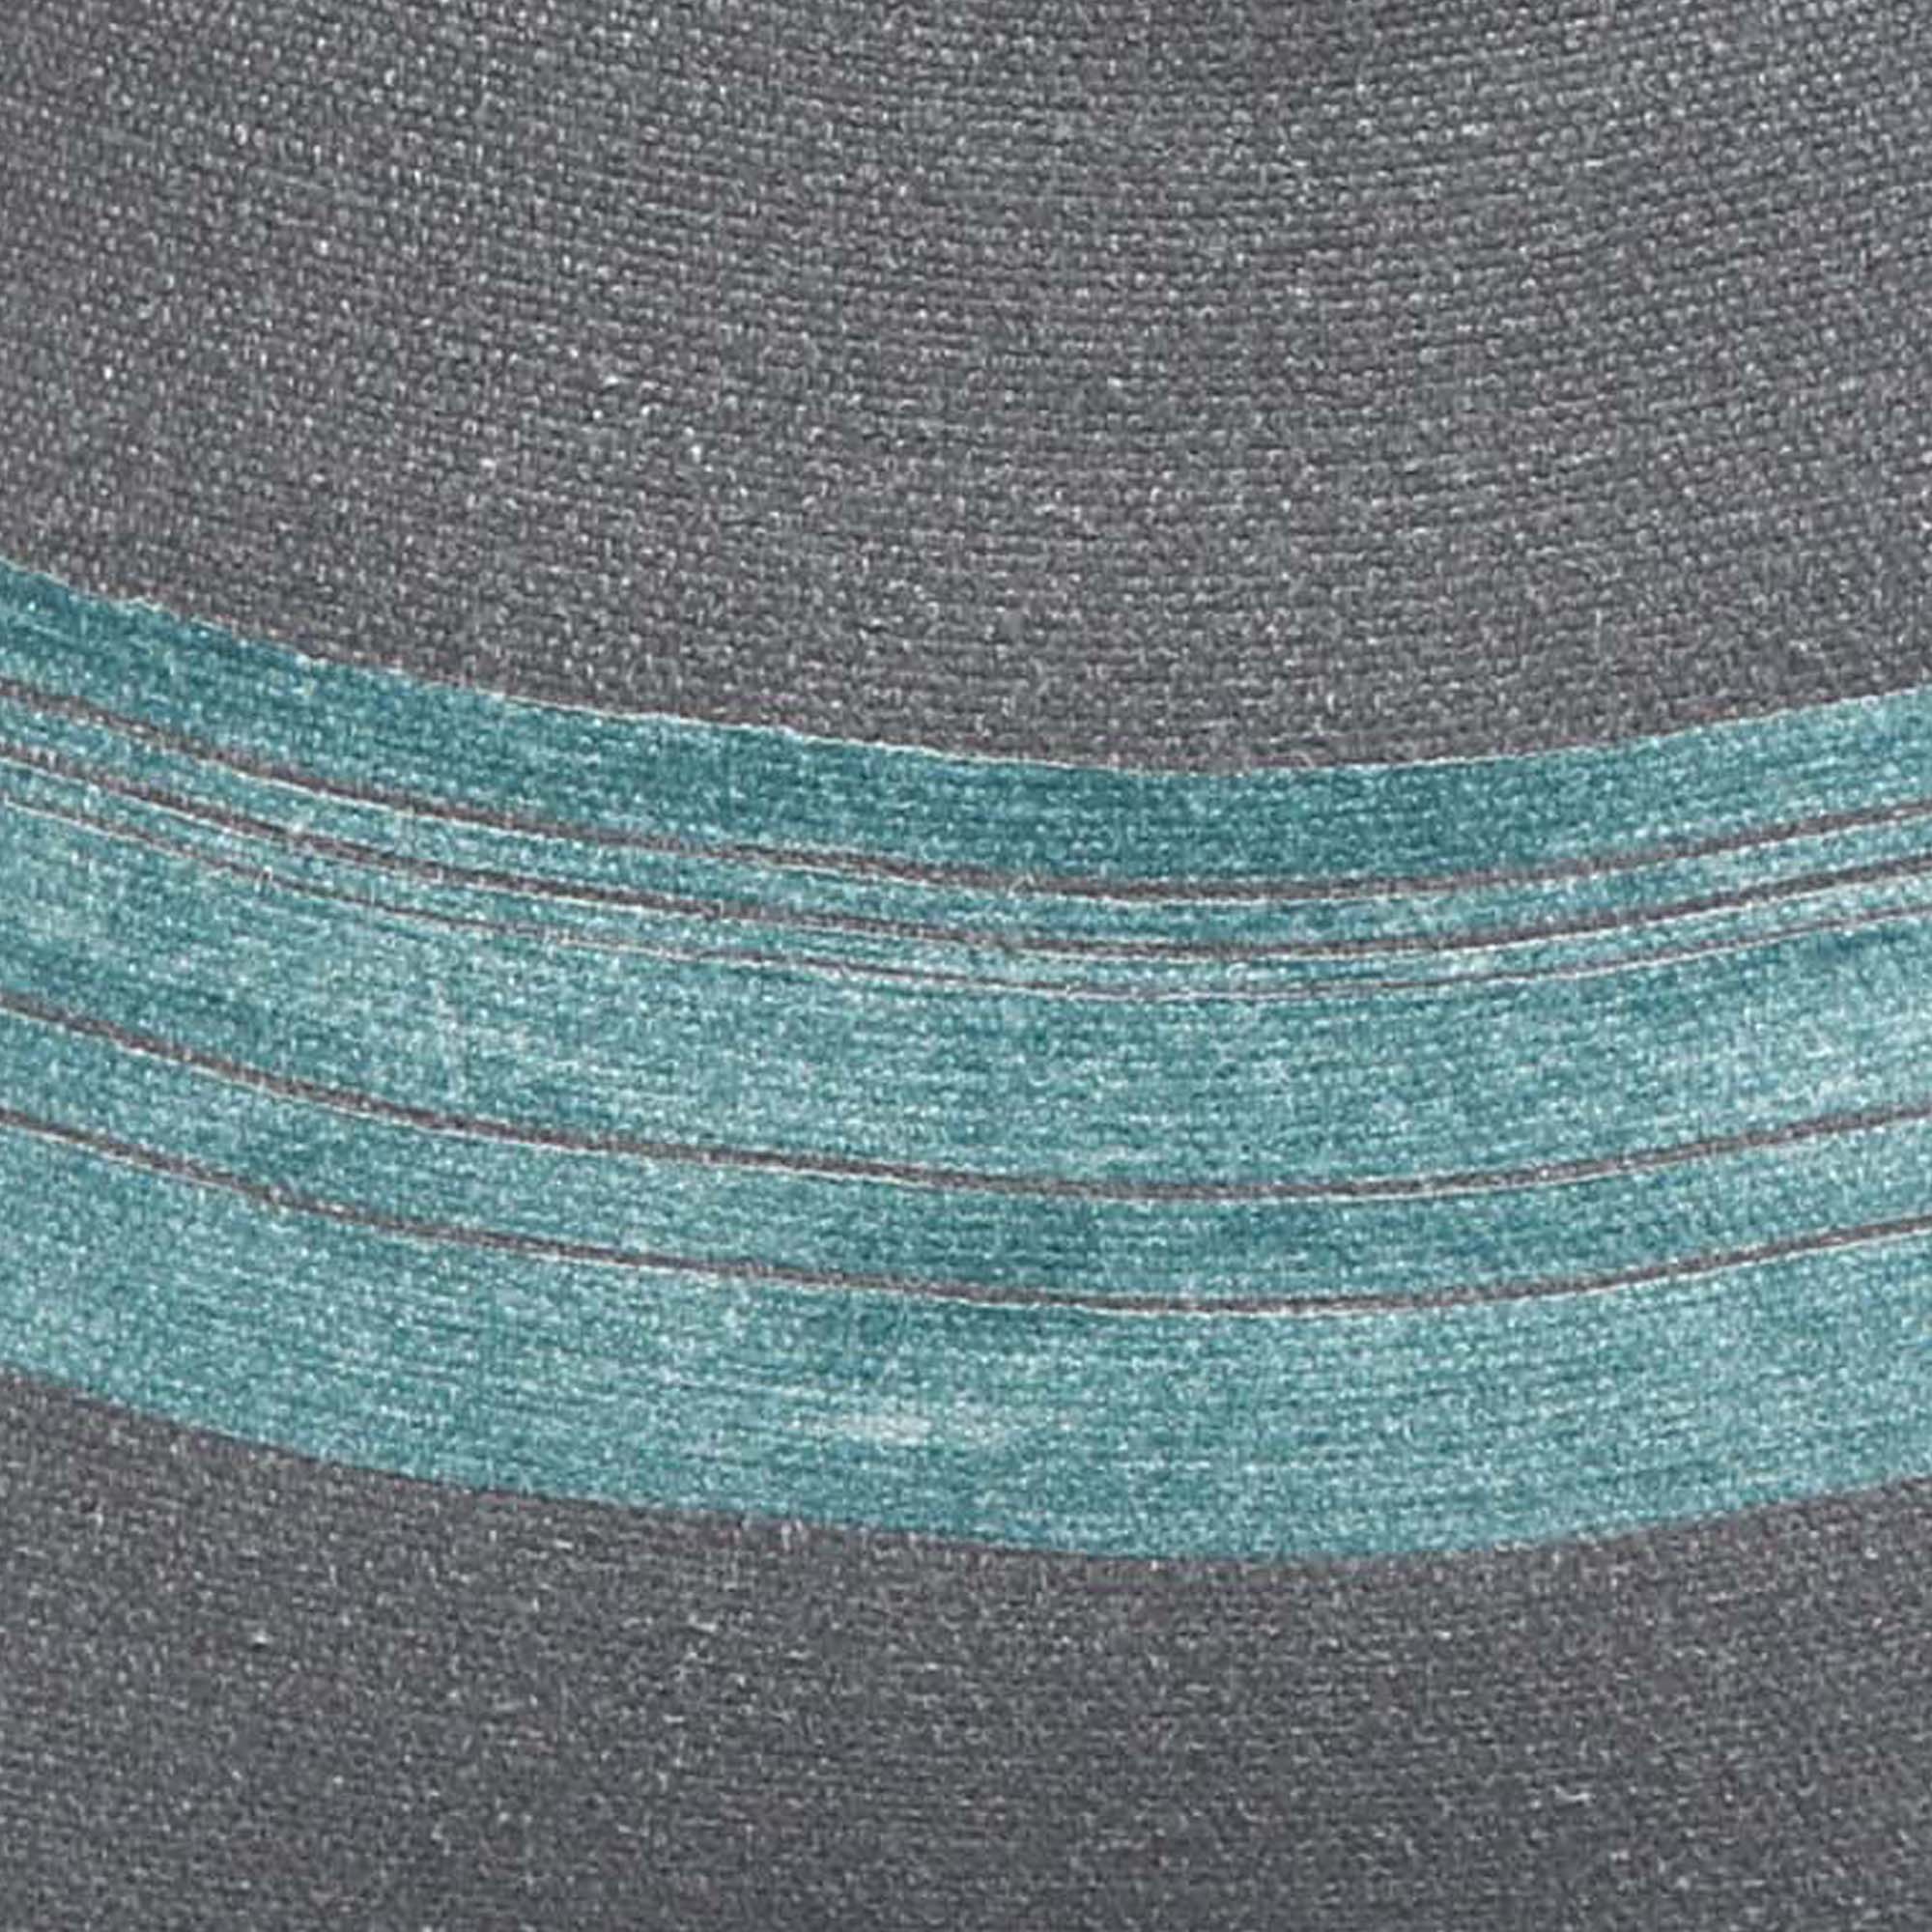 Askew Jade Linen / 4x4 inch Fabric Swatch